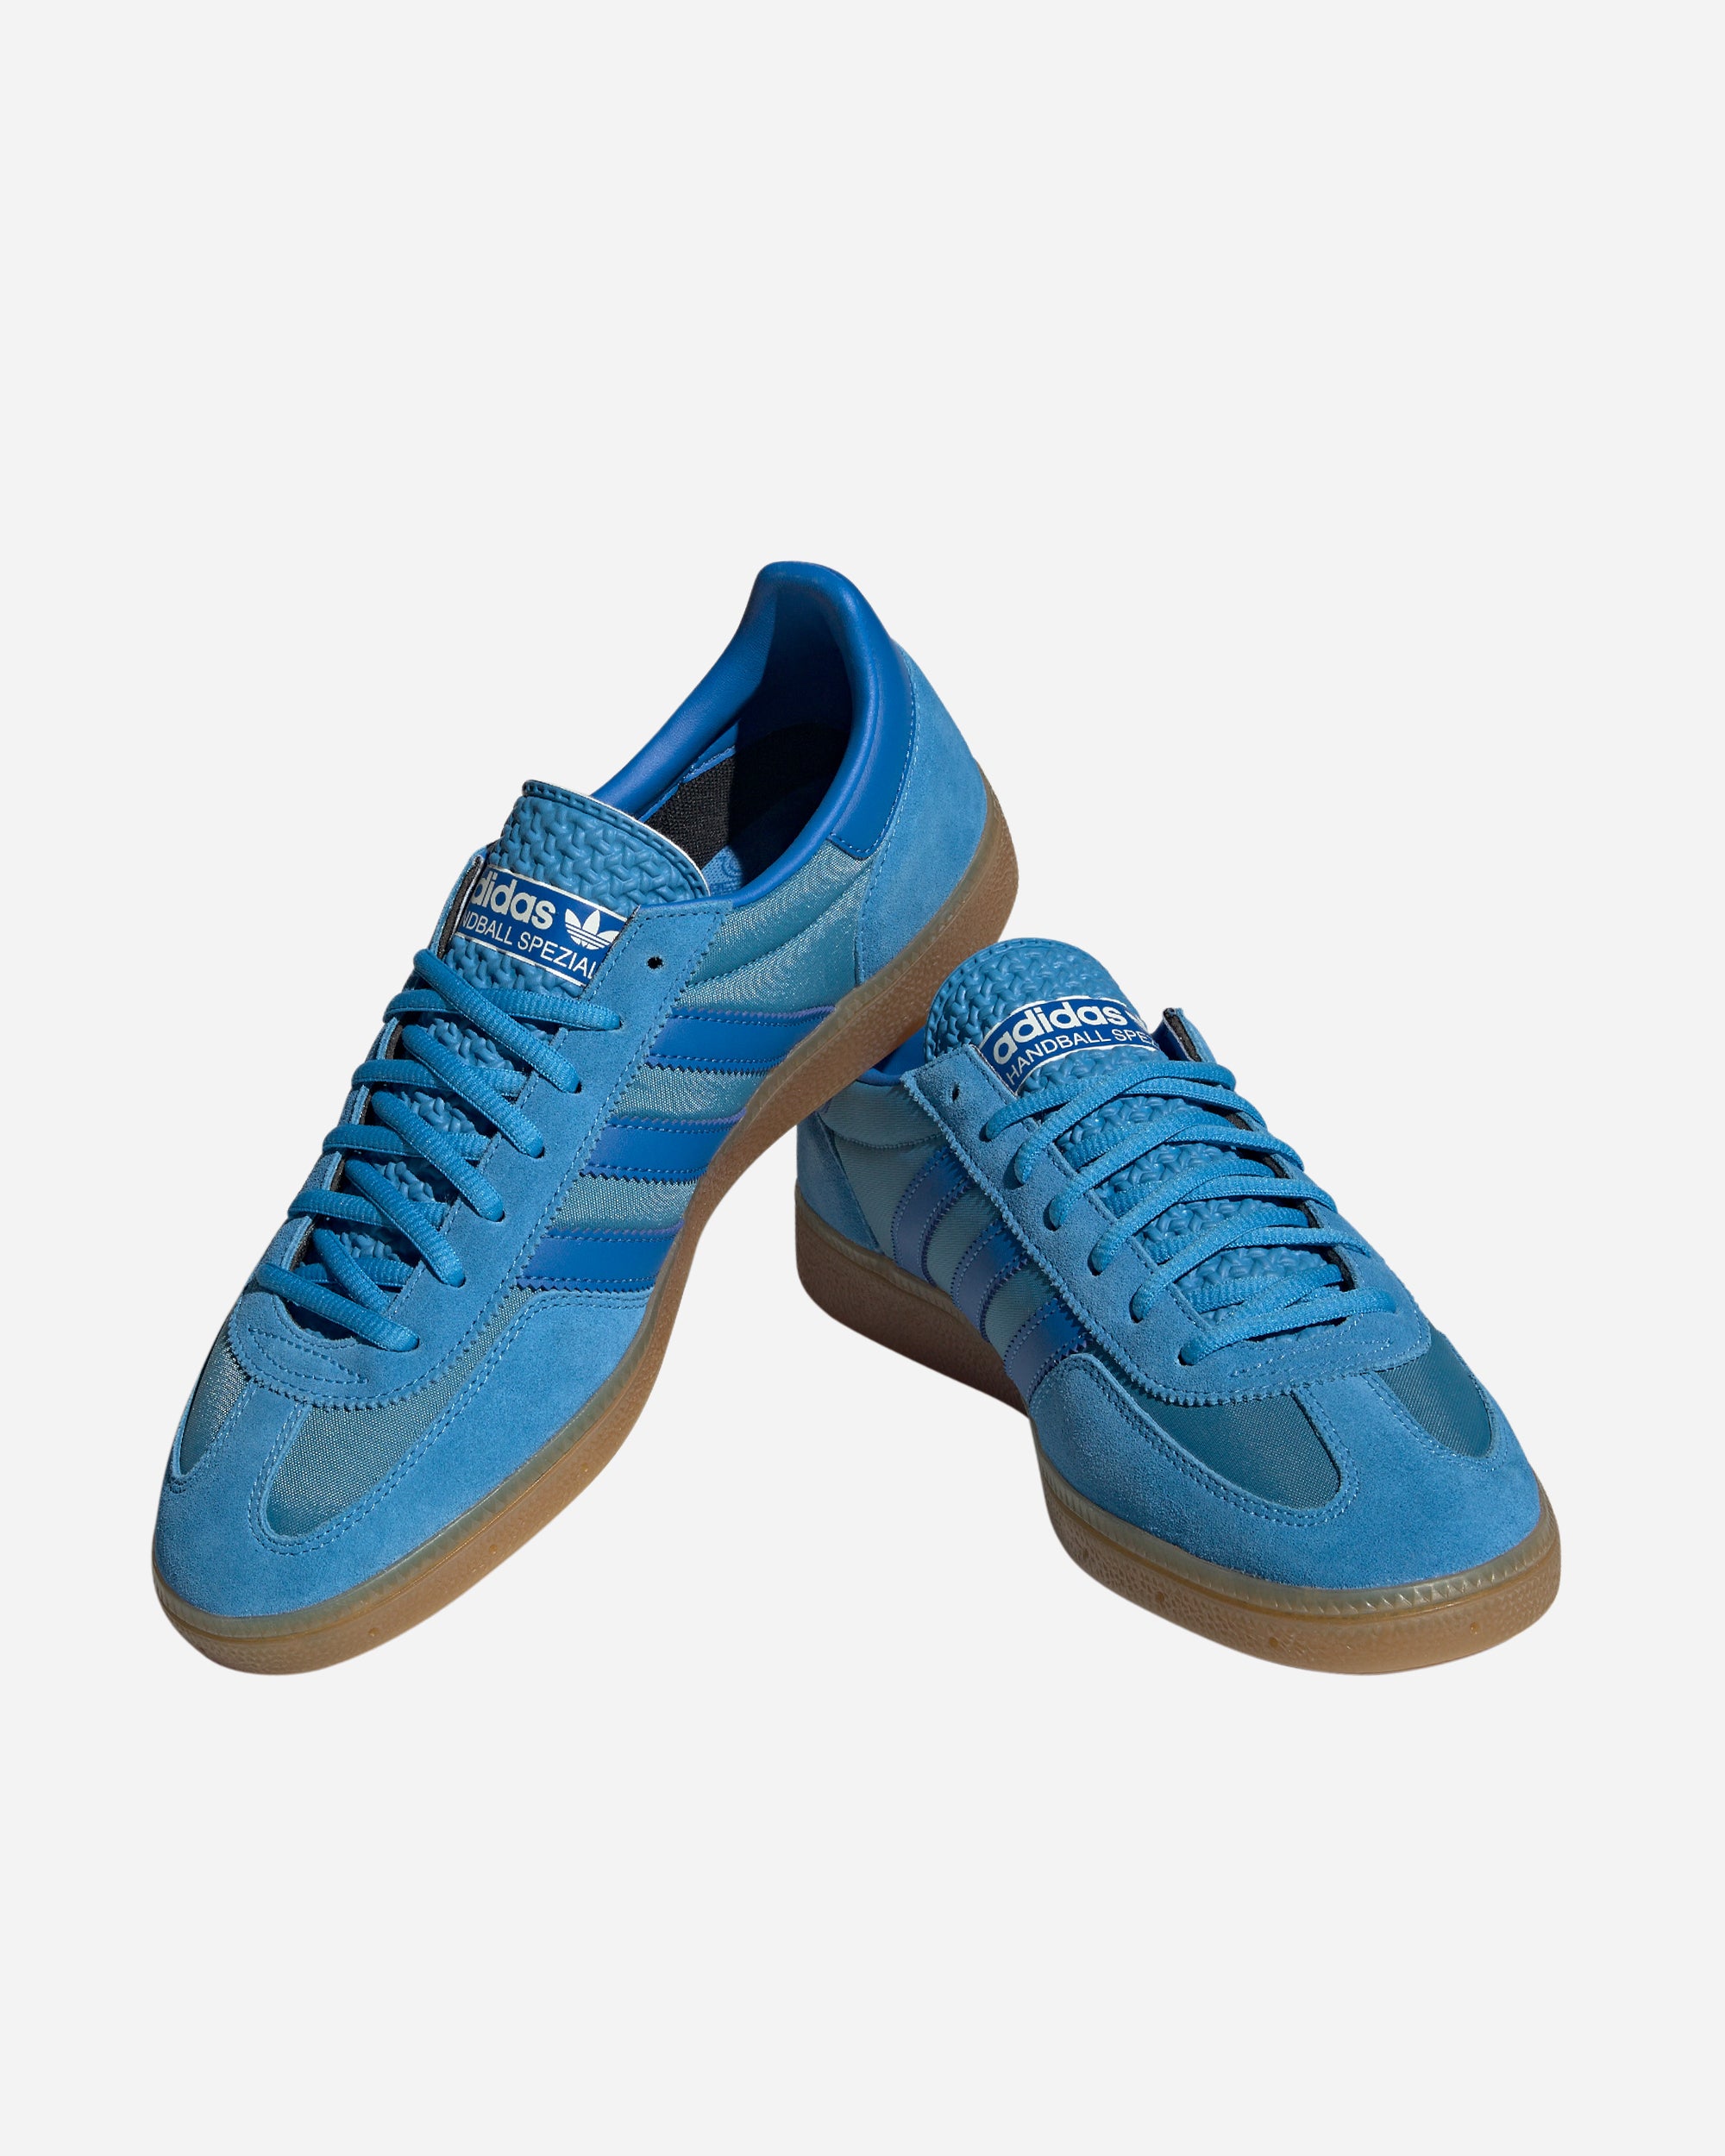 Adidas Ori Handball Spezial pulse blue GY7408